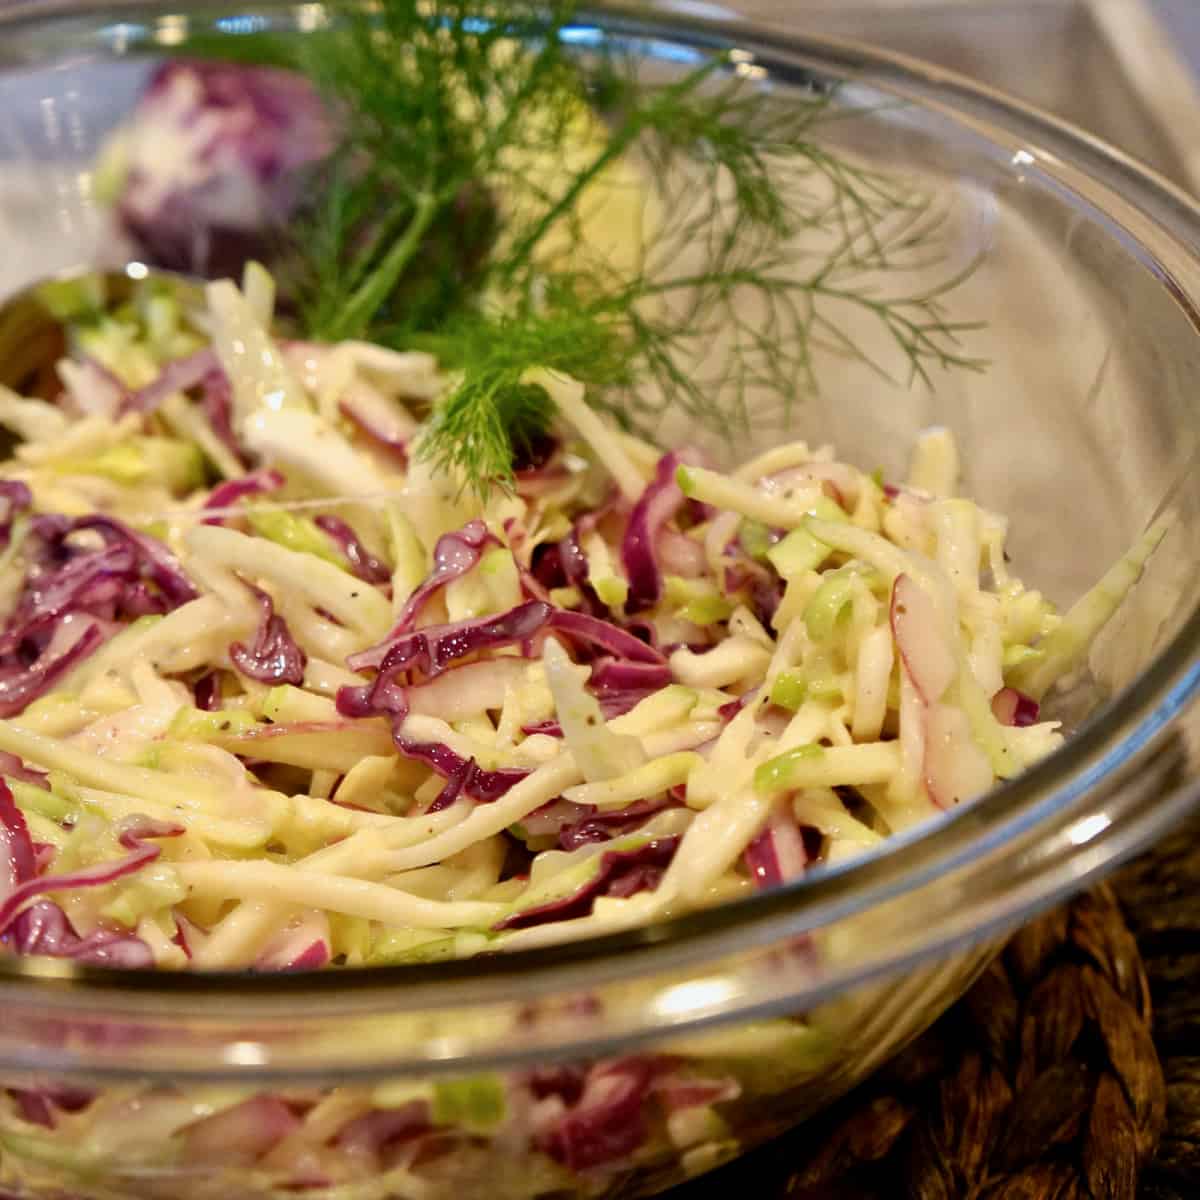 A bowl of Cabbage-Fennel-Apple Slaw with fennel fond garnish.